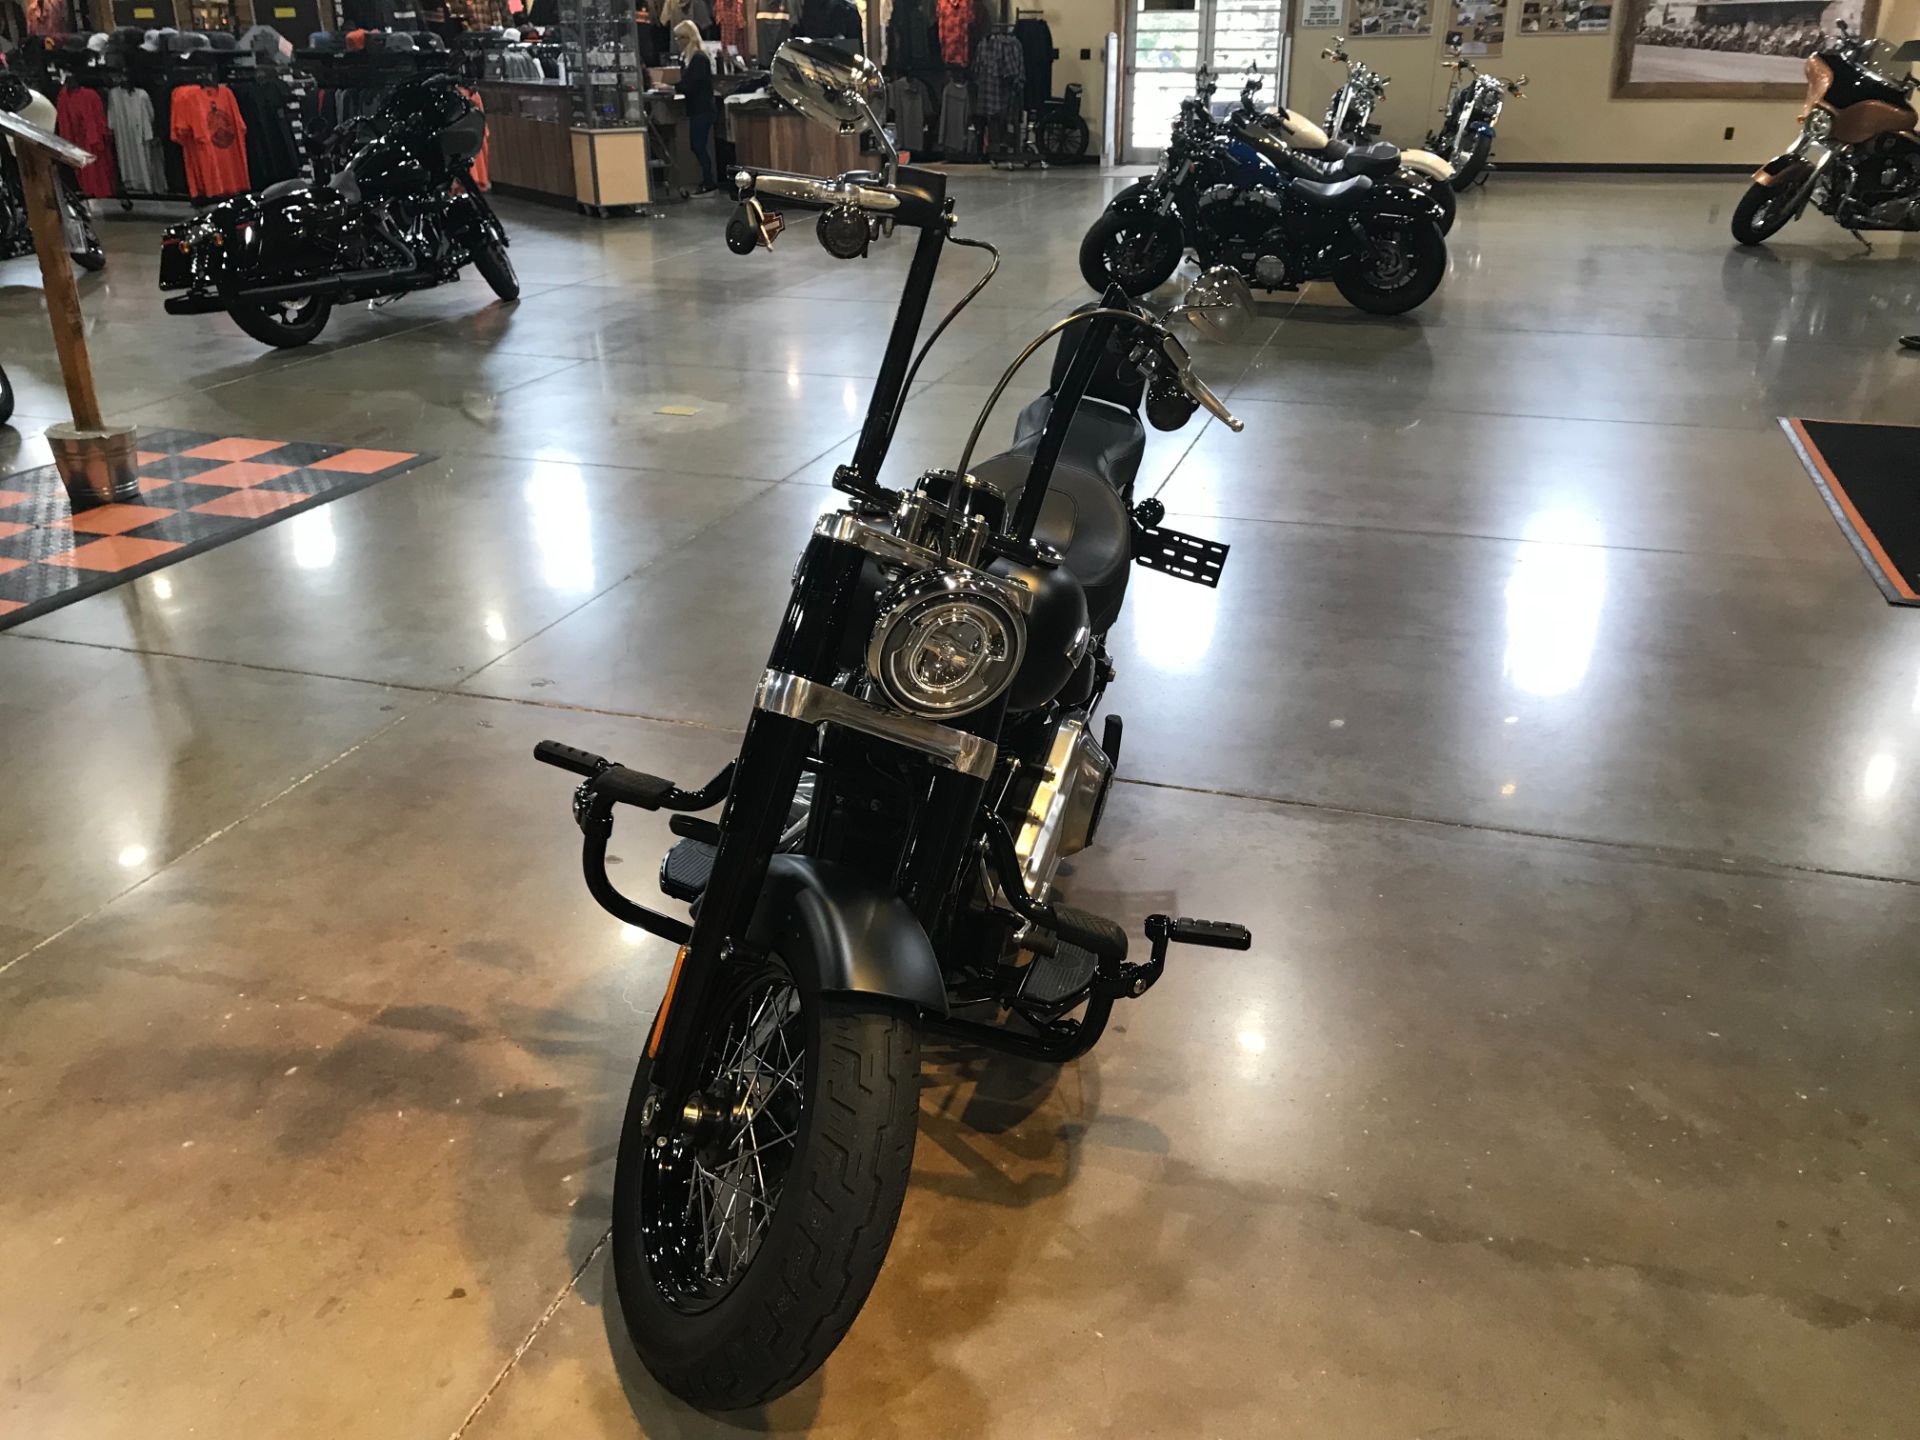 2020 Harley-Davidson Softail Slim® in Kingwood, Texas - Photo 4